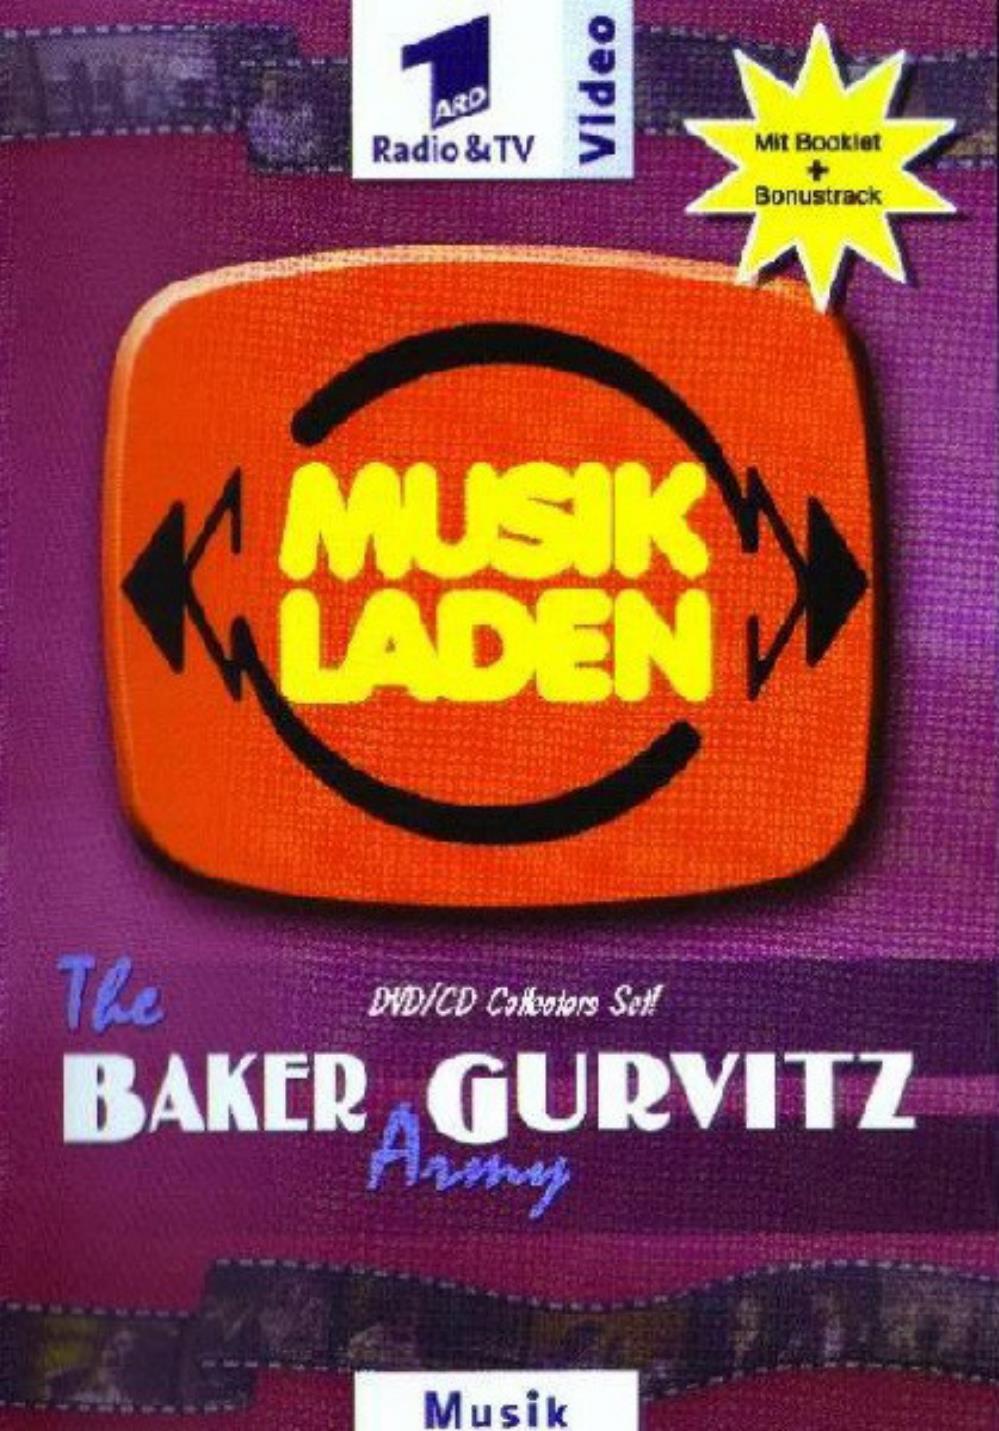 Baker Gurvitz Army Musikladen album cover